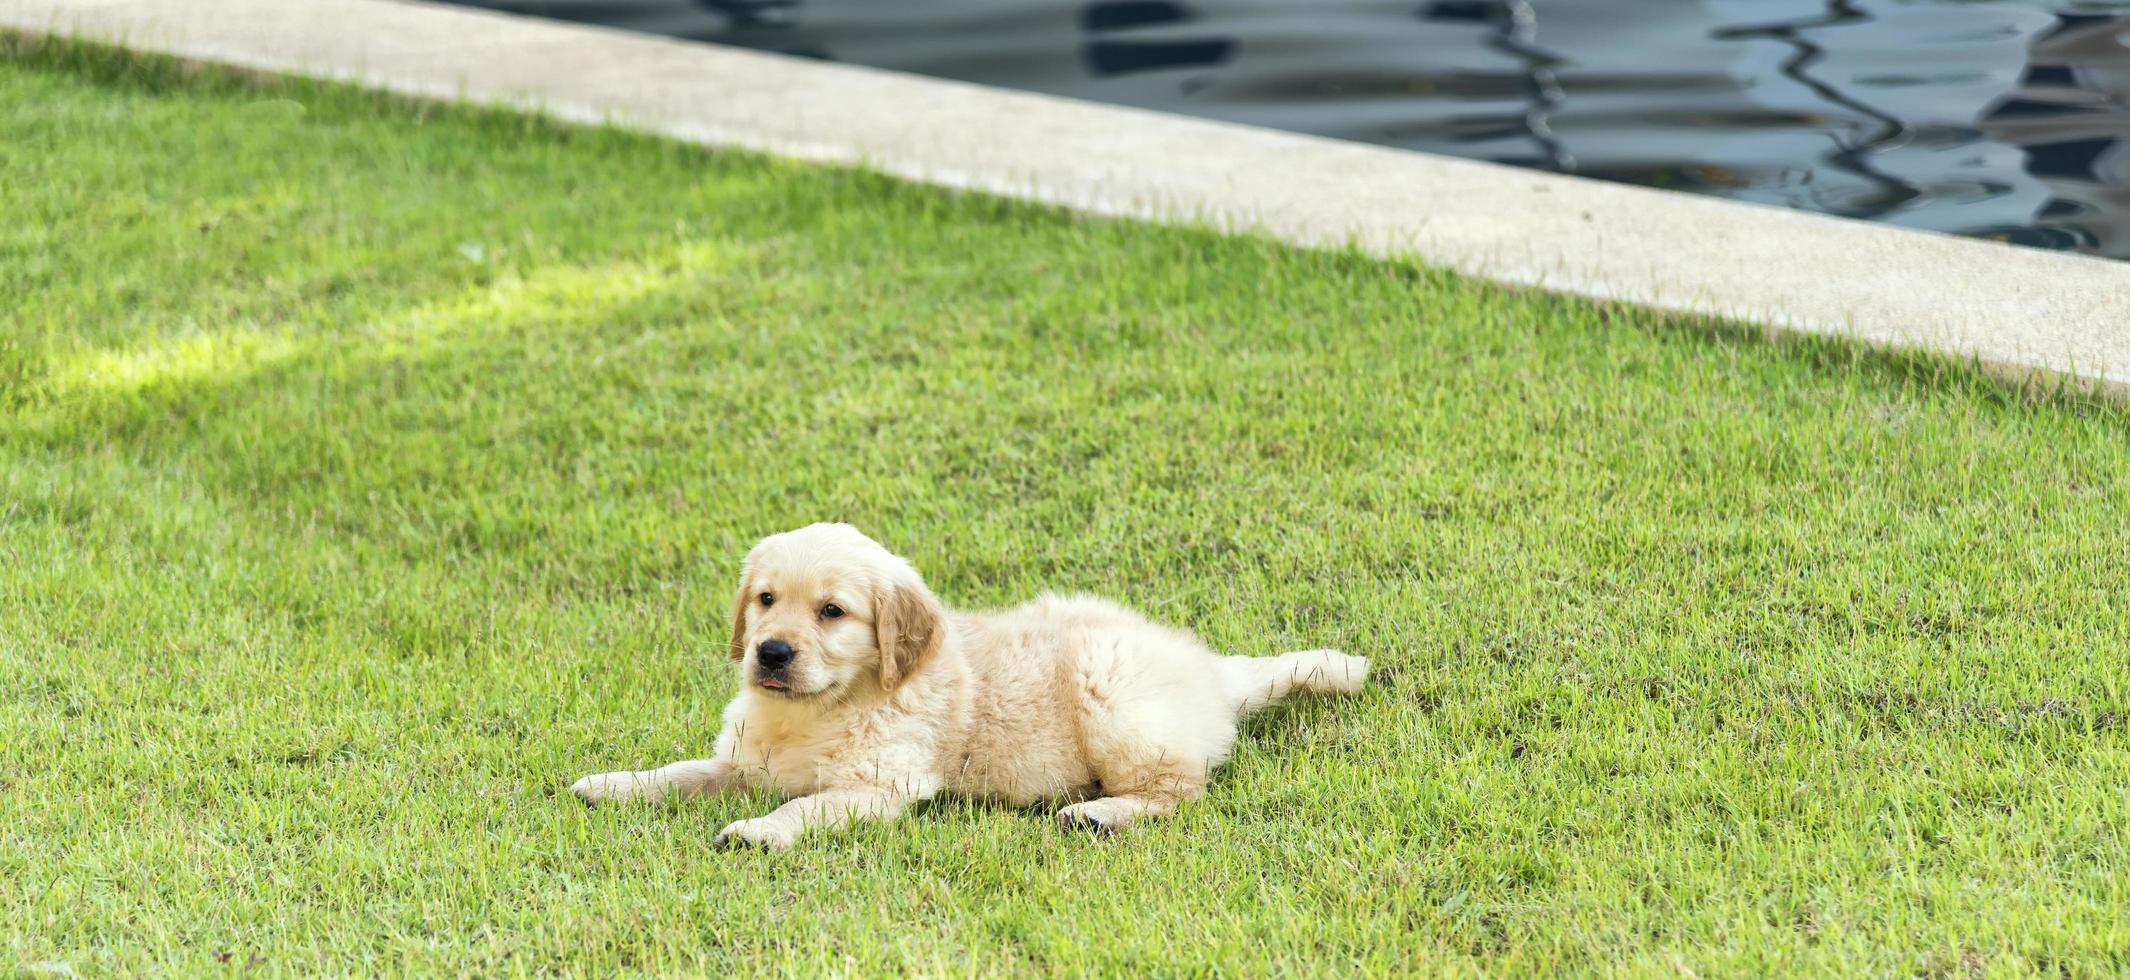 Cachorro de golden retriever sobre hierba verde foto